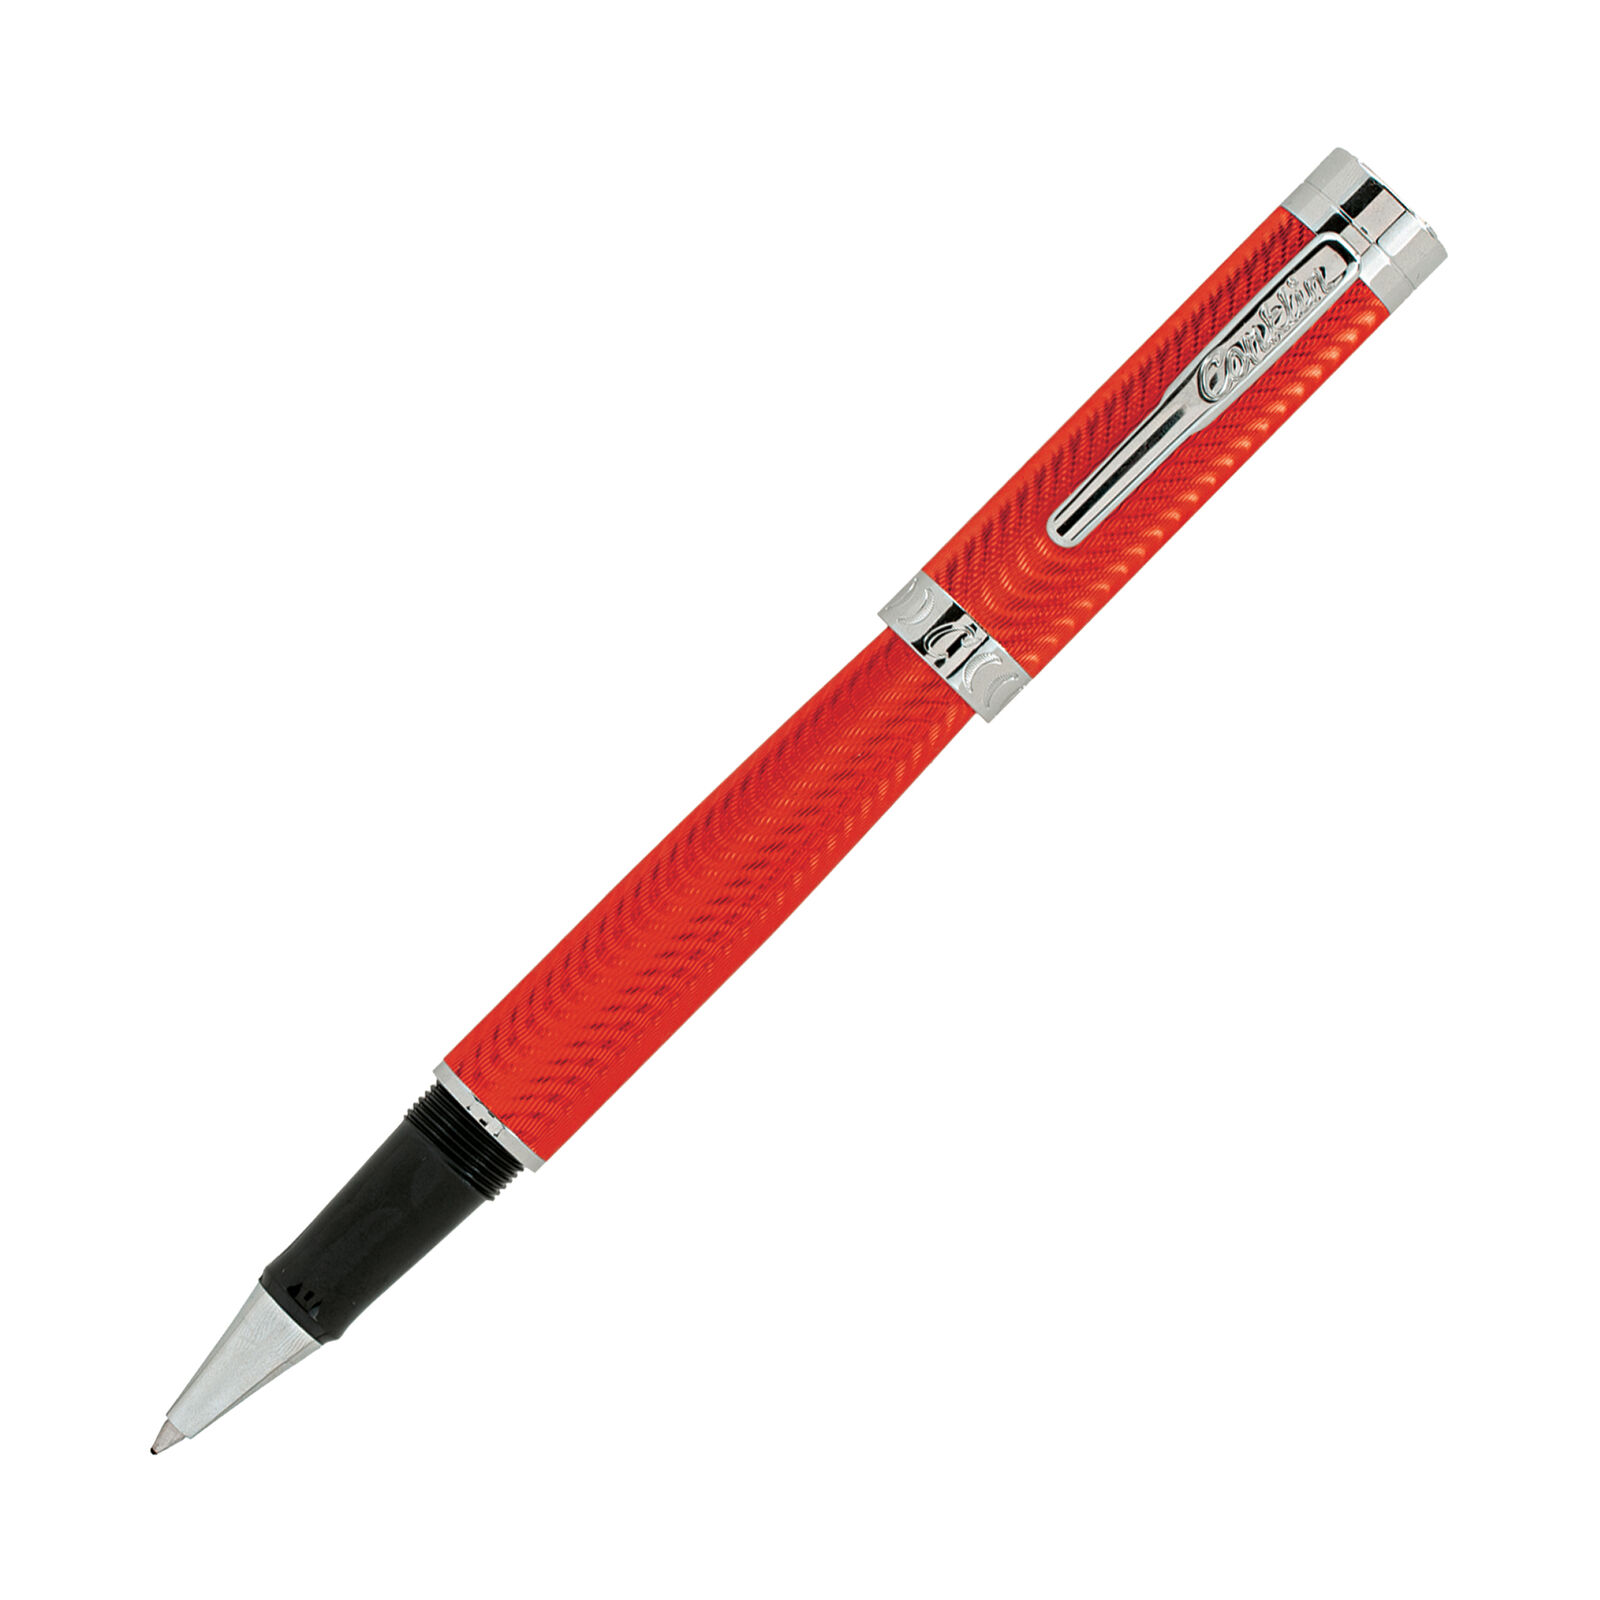 Conklin Herringbone Signature Rollerball Pen in Red - NEW in Original Box